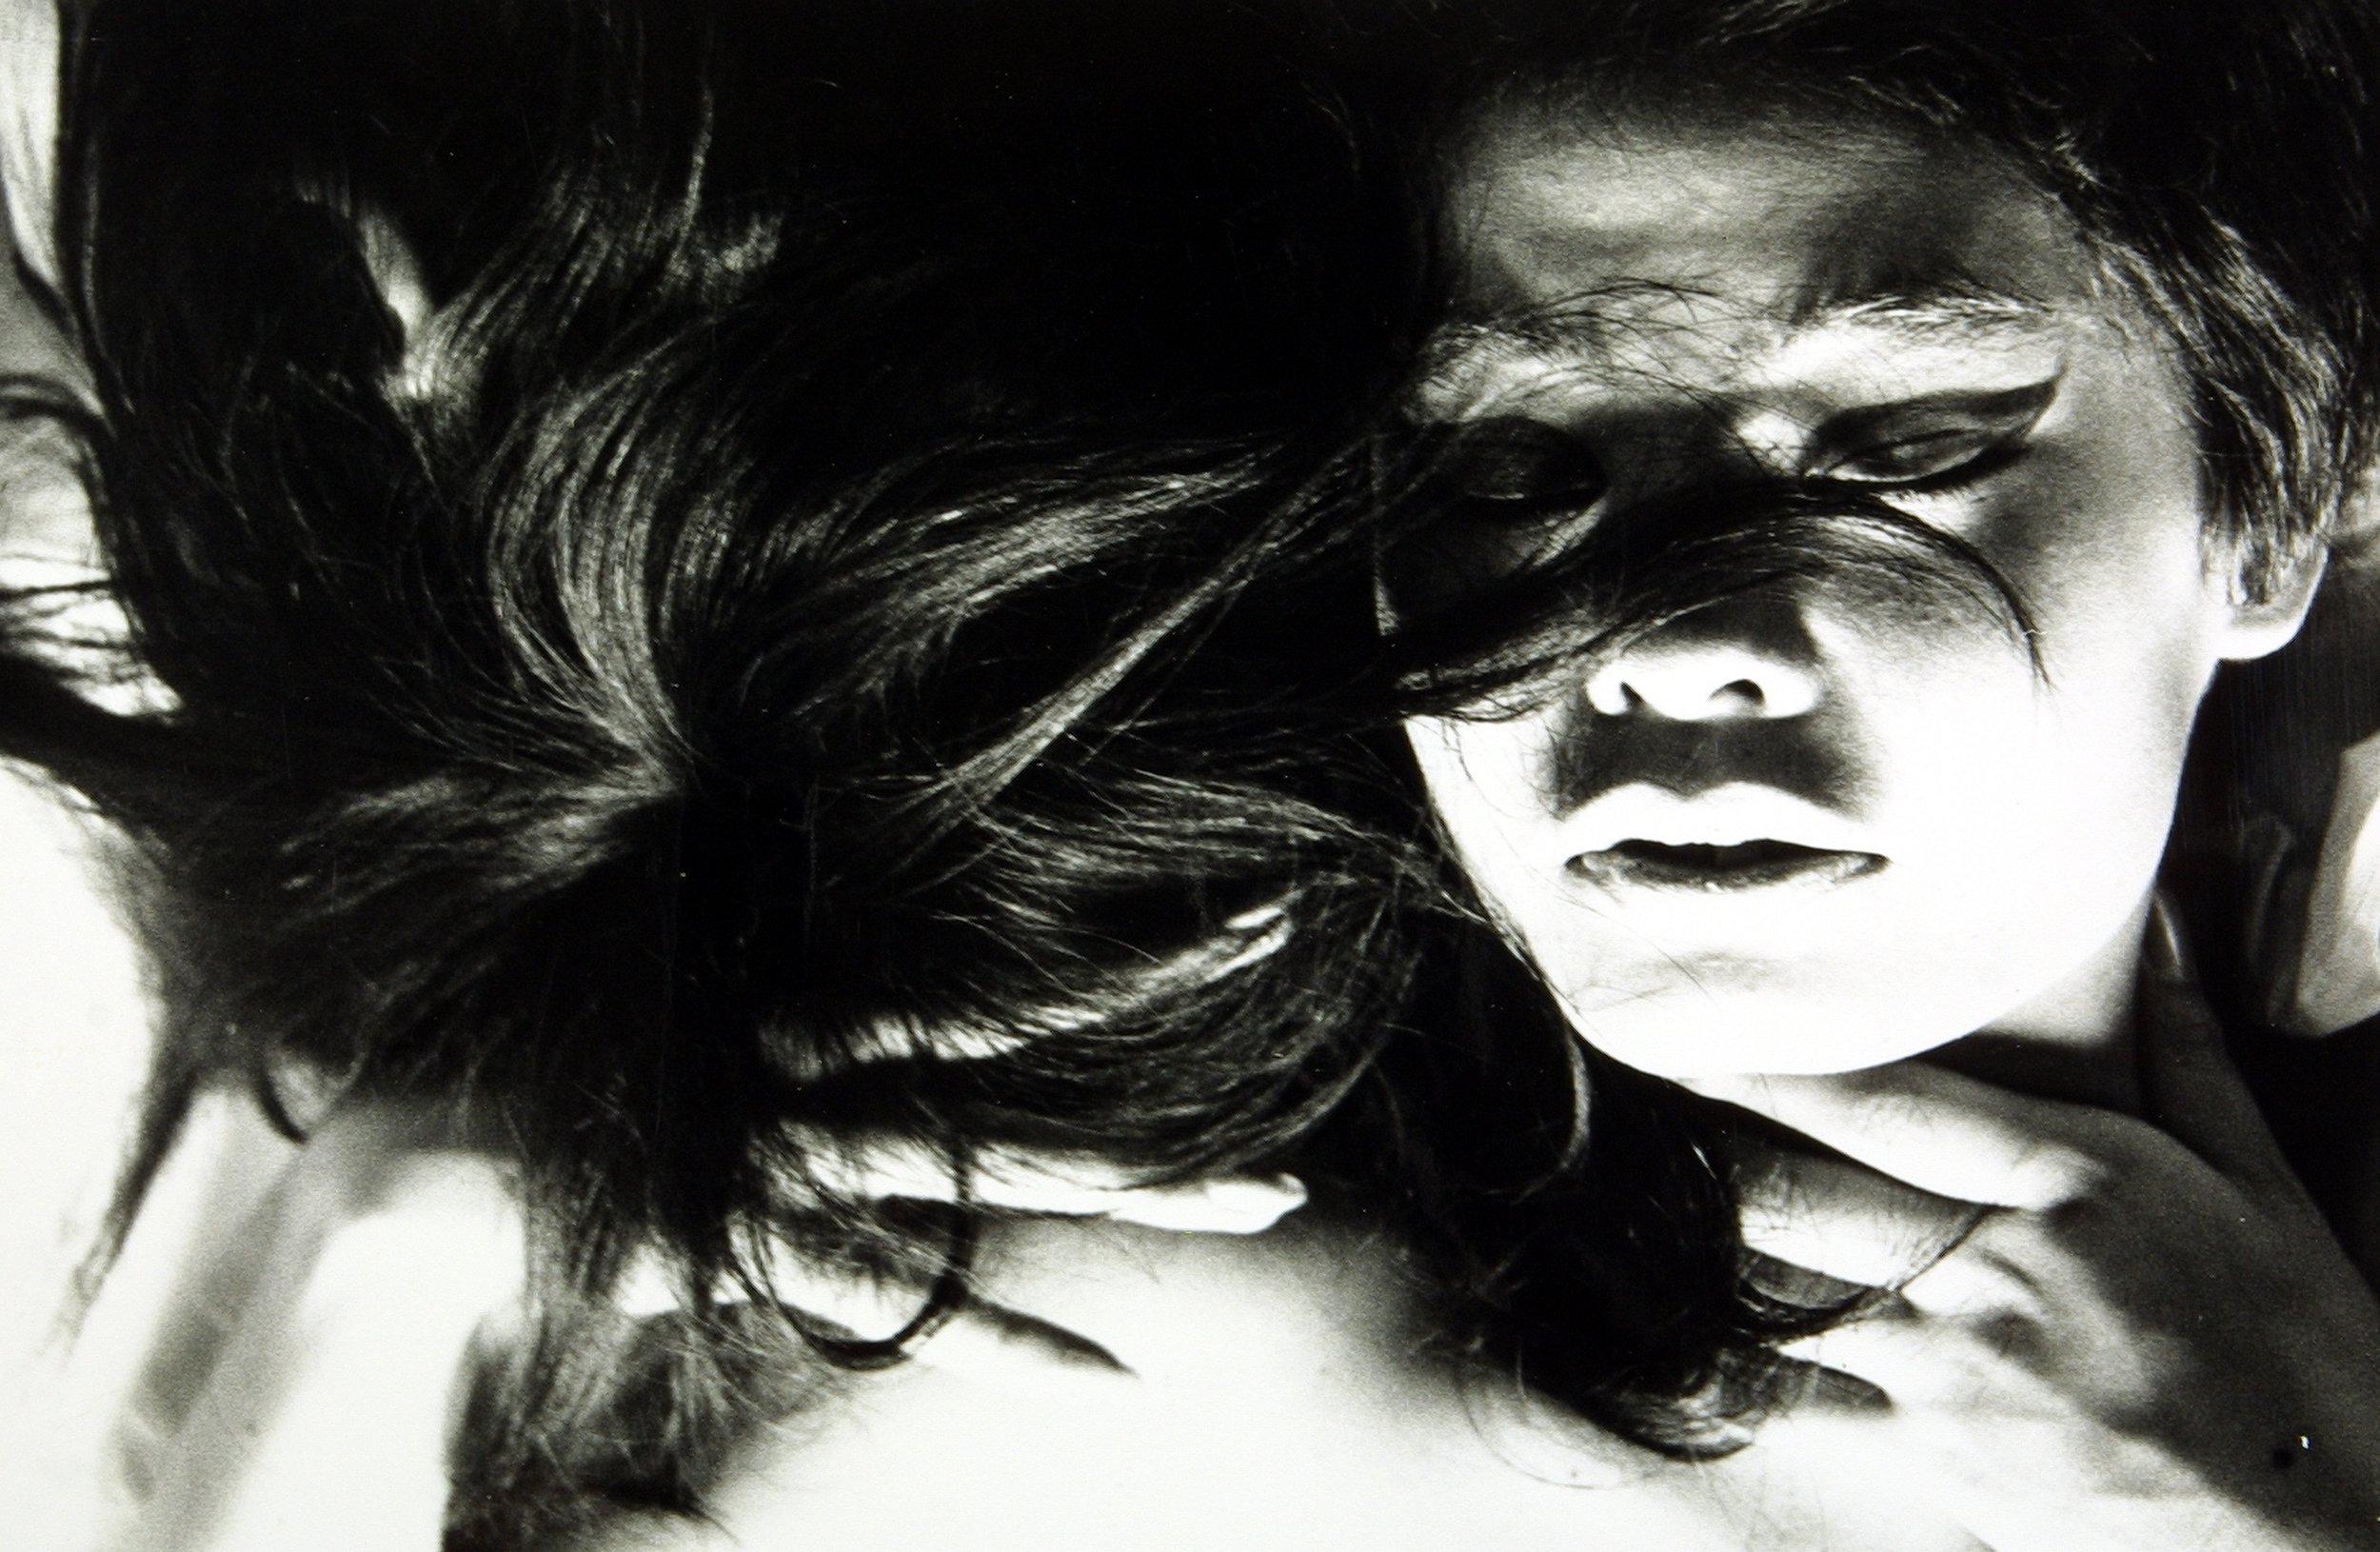  © Masahisa Fukase/Courtesy Michael Hoppen Gallery London: Ohne Titel, 1961−1970, aus der Serie „Yoko“ 